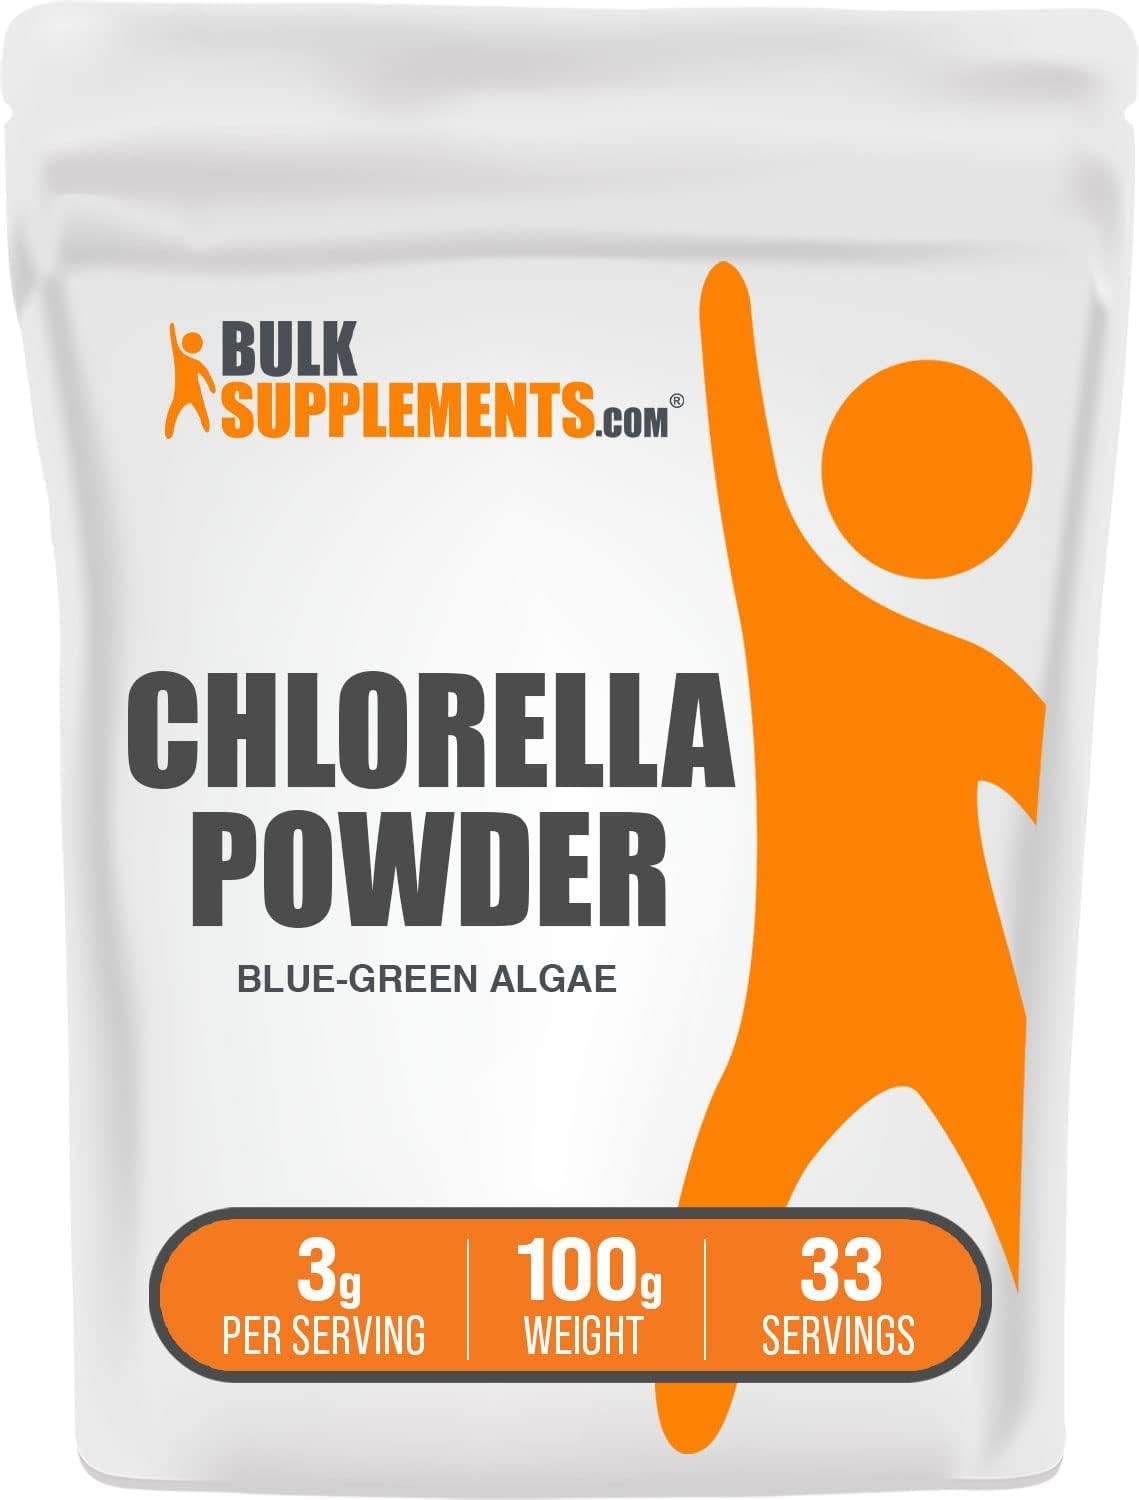 Chlorella 100g bag